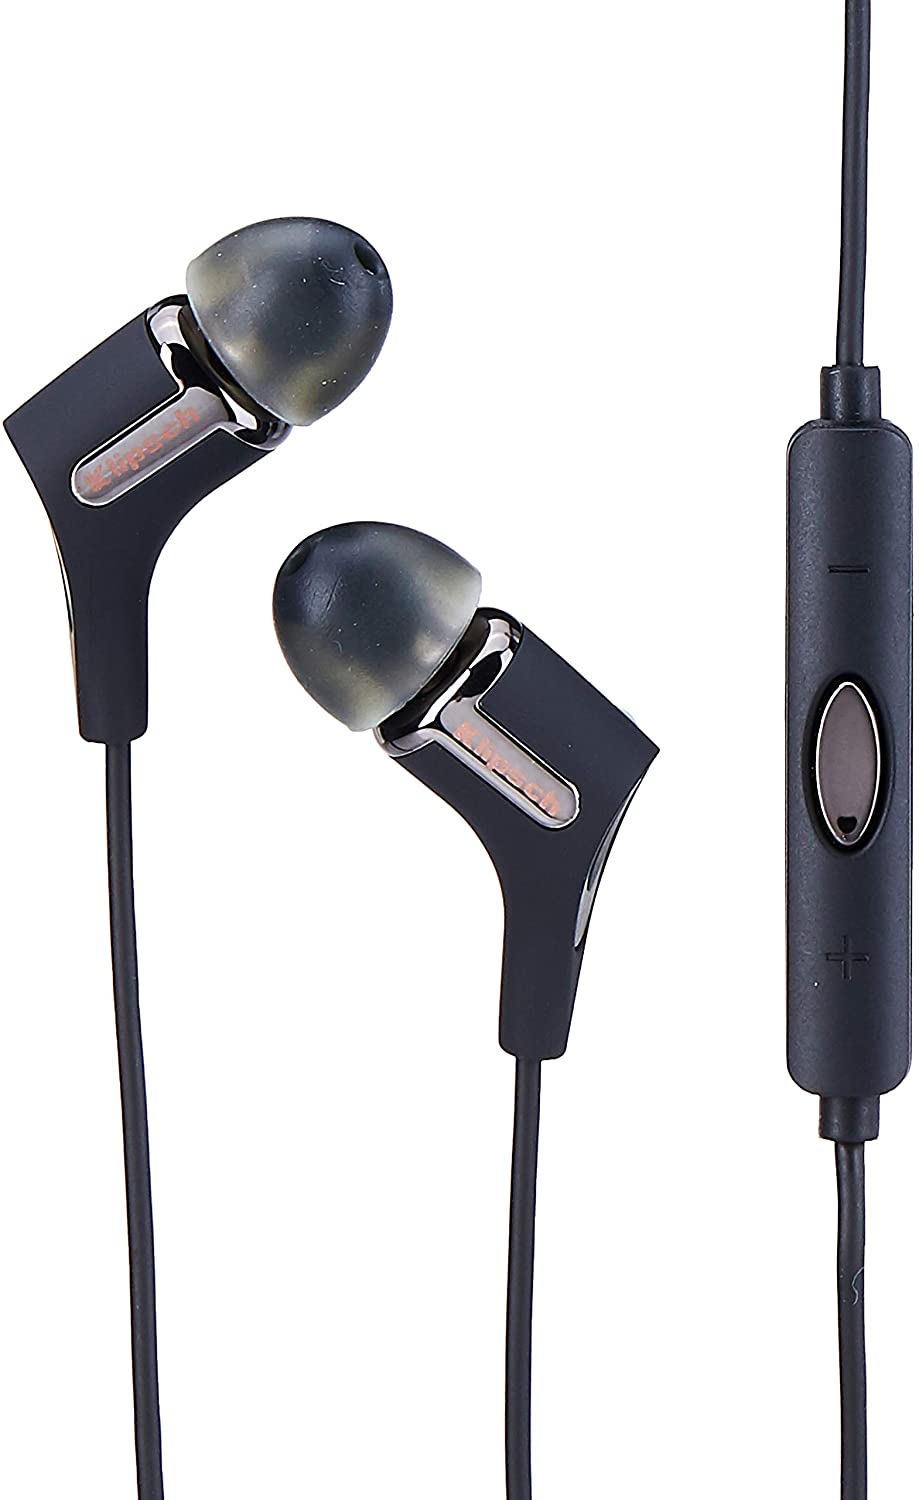 Klipsch R6i-II-R In-Ear Headphones Black - Certified Refurbished